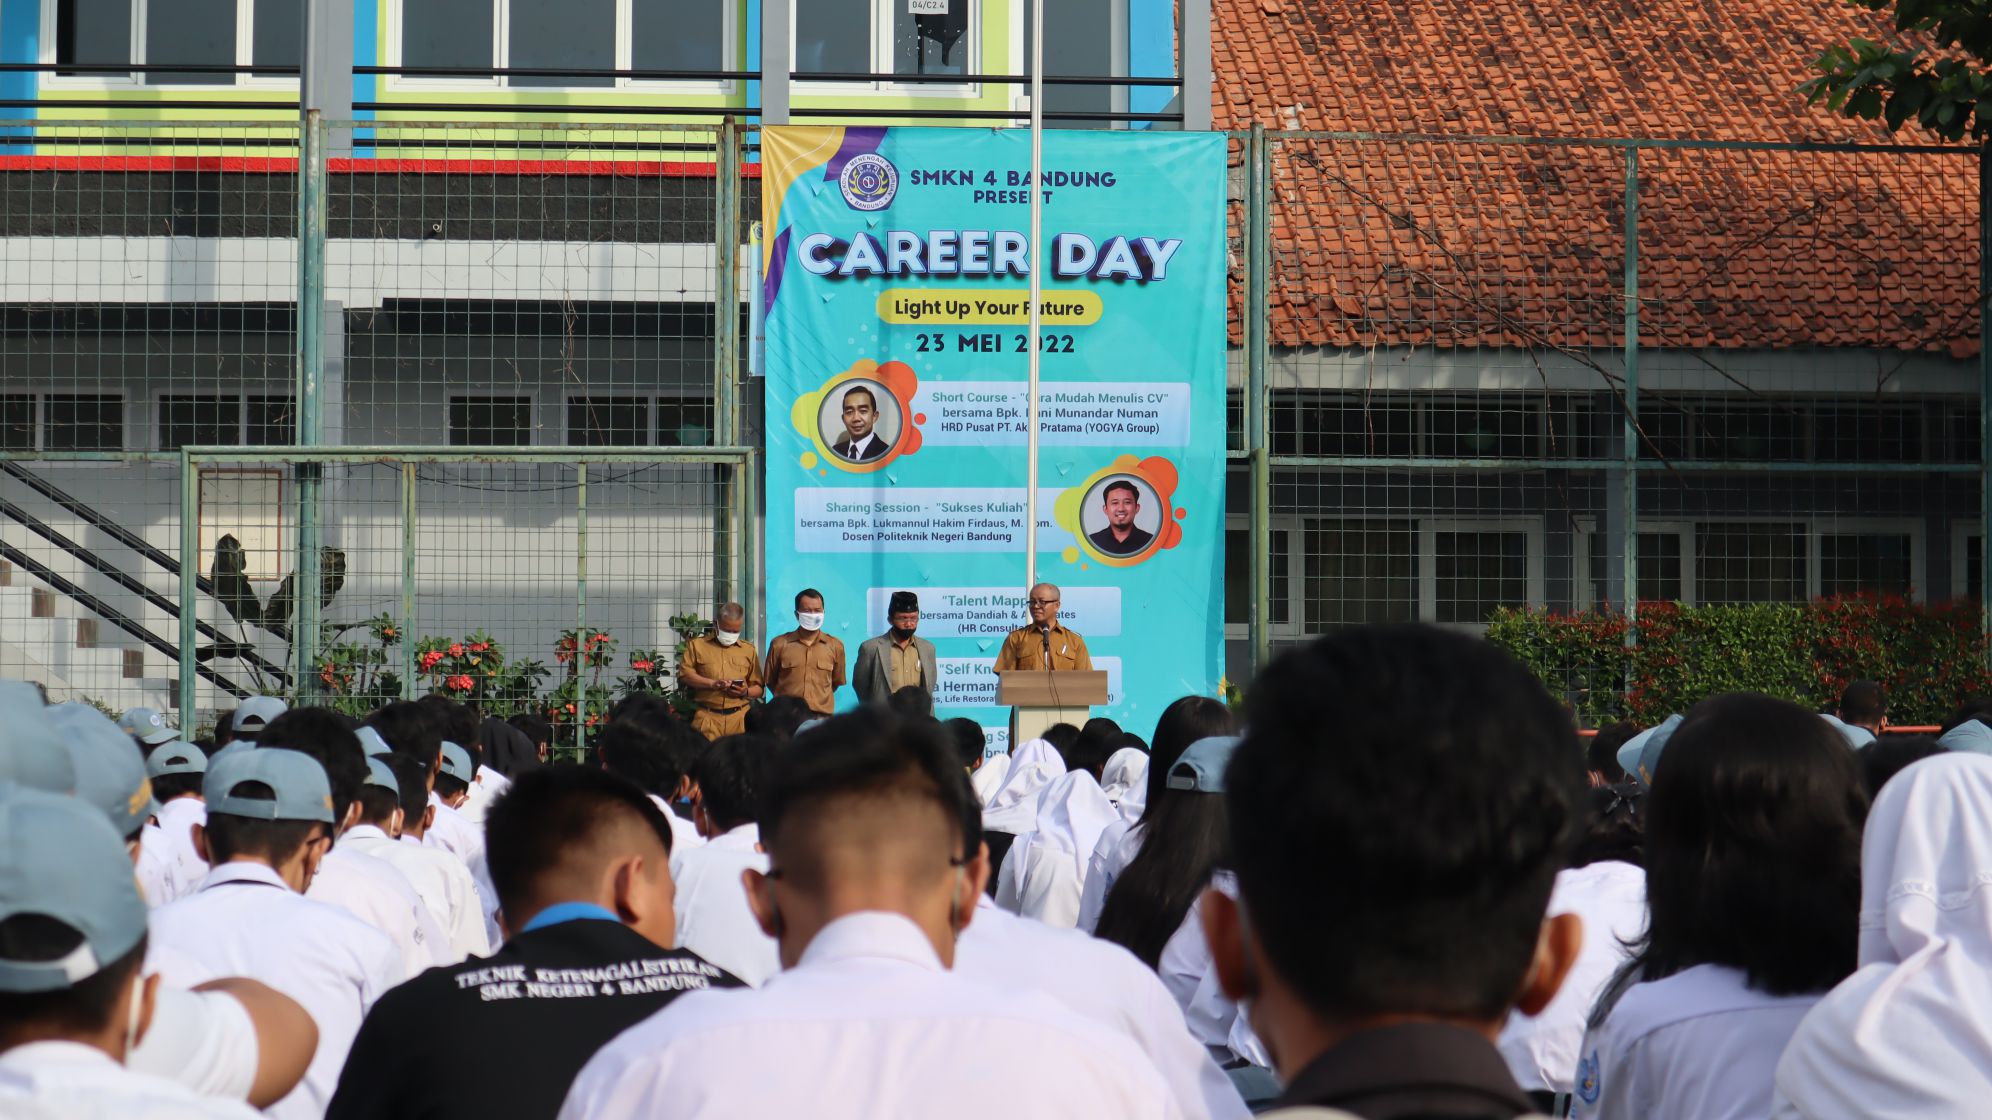 Career Day SMKN 4 Bandung 2022 - Light Up Your Future